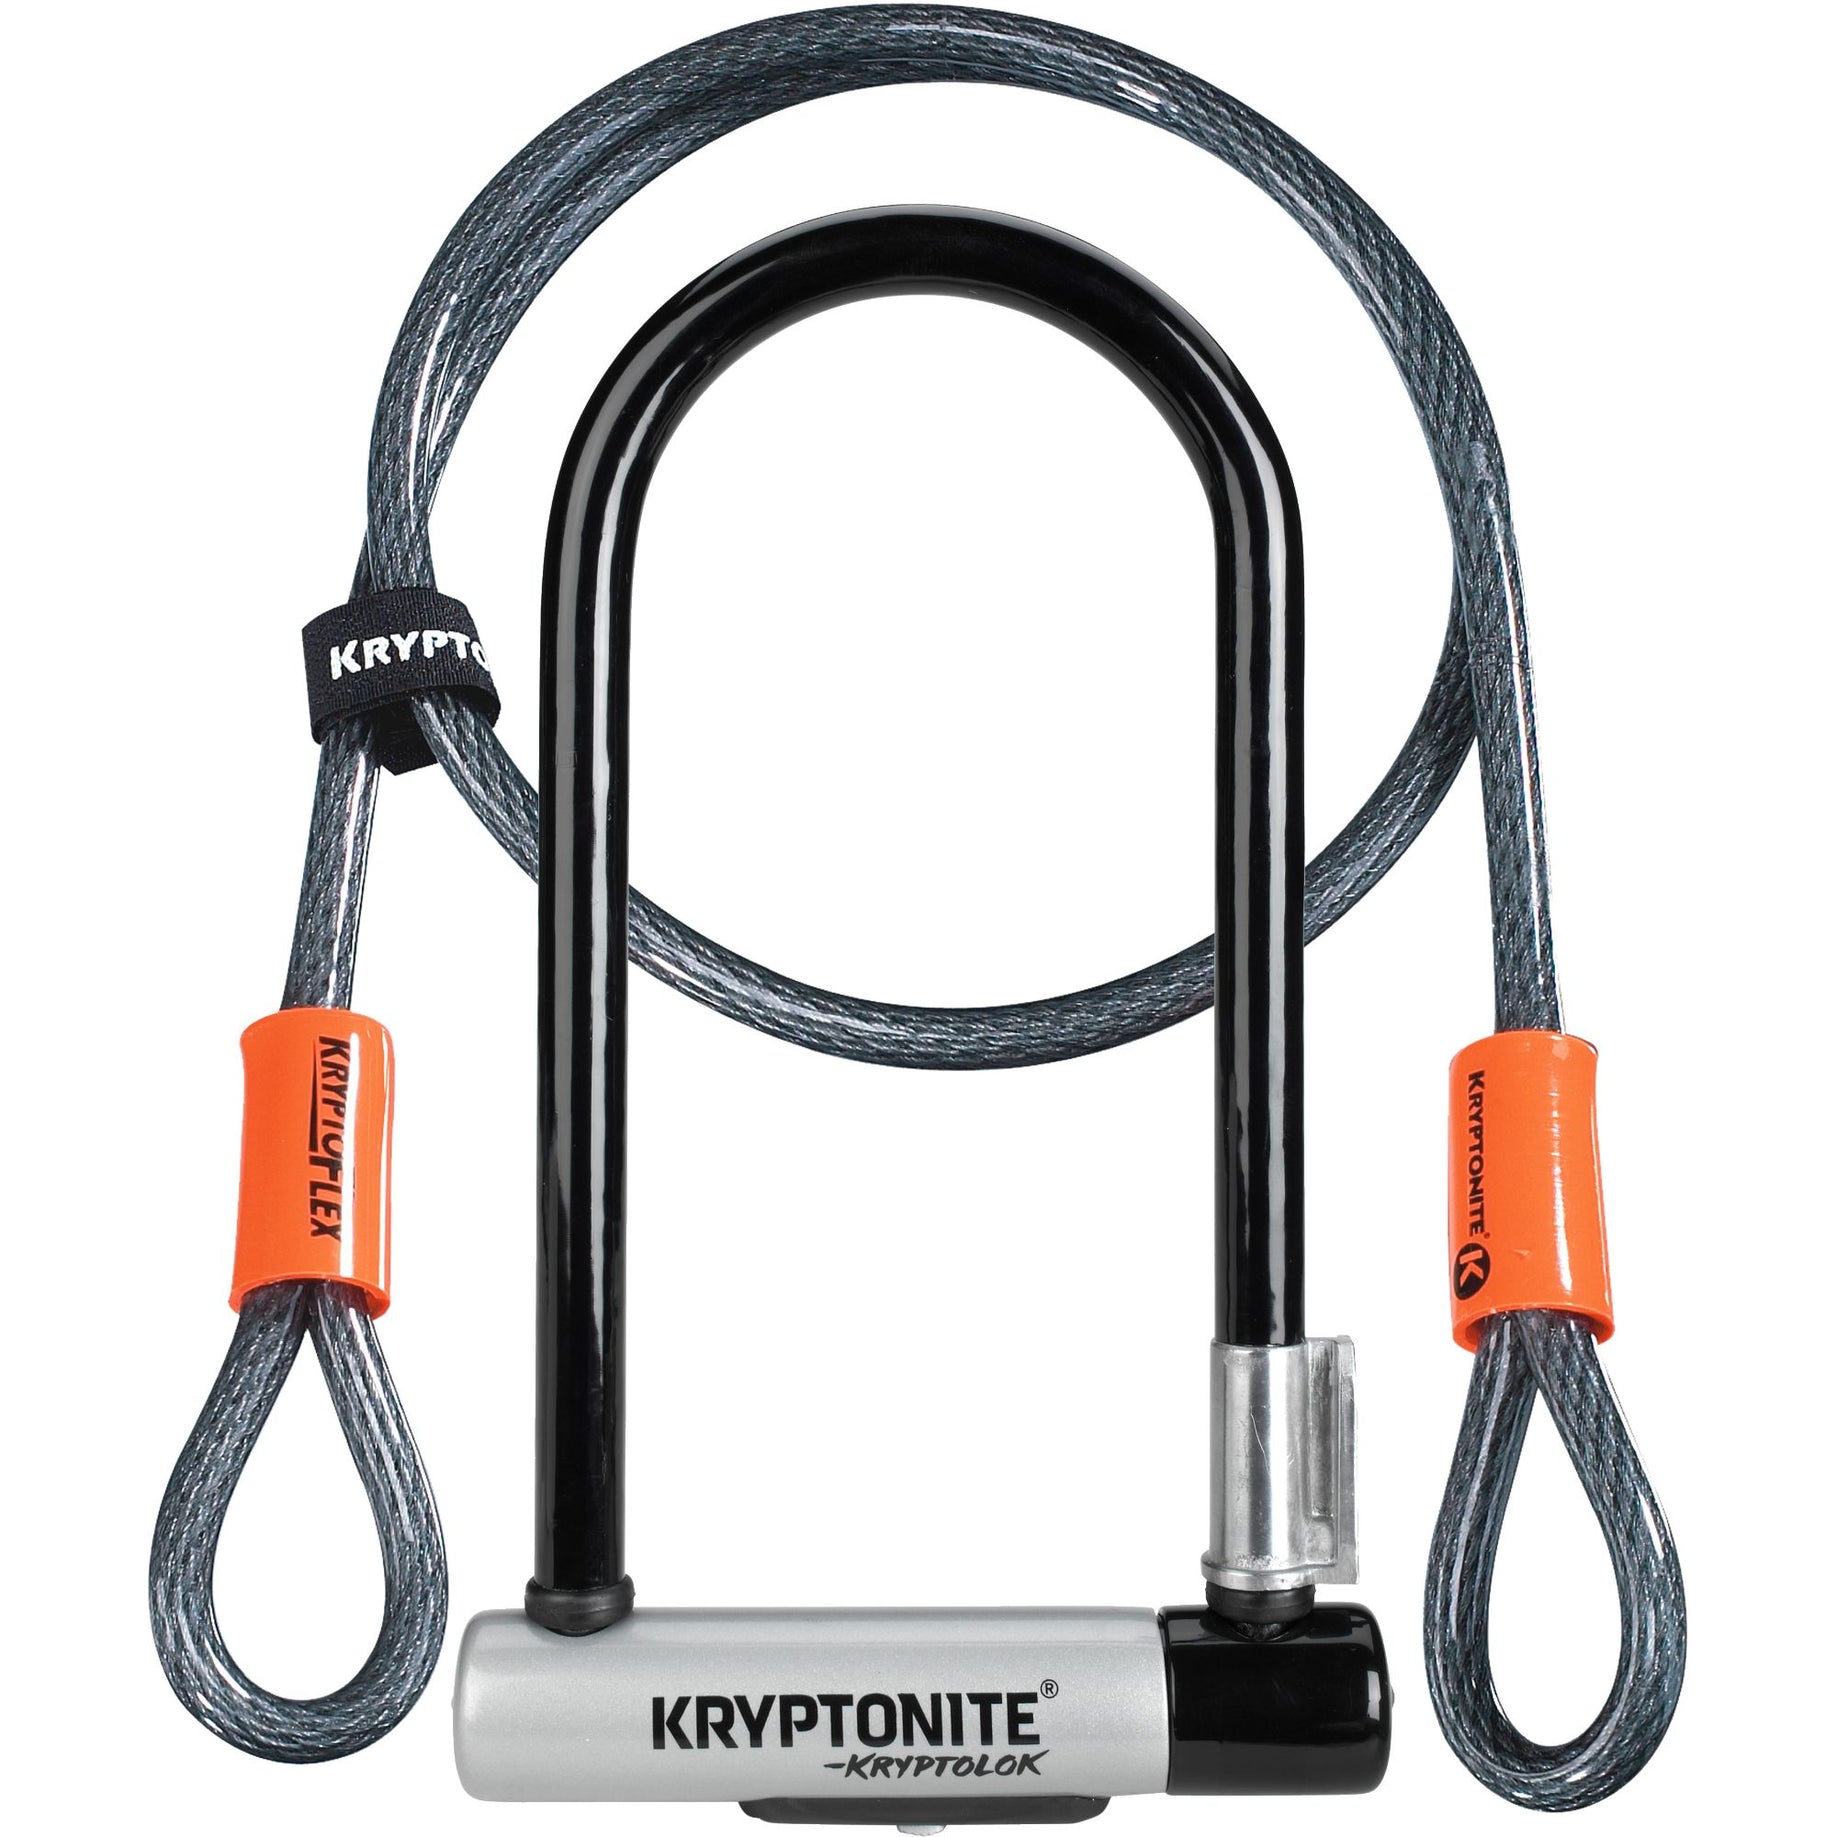 Kryptonite Kryptolok Standard U-Lock With 4 Foot Flex Cable Sold Secure Gold